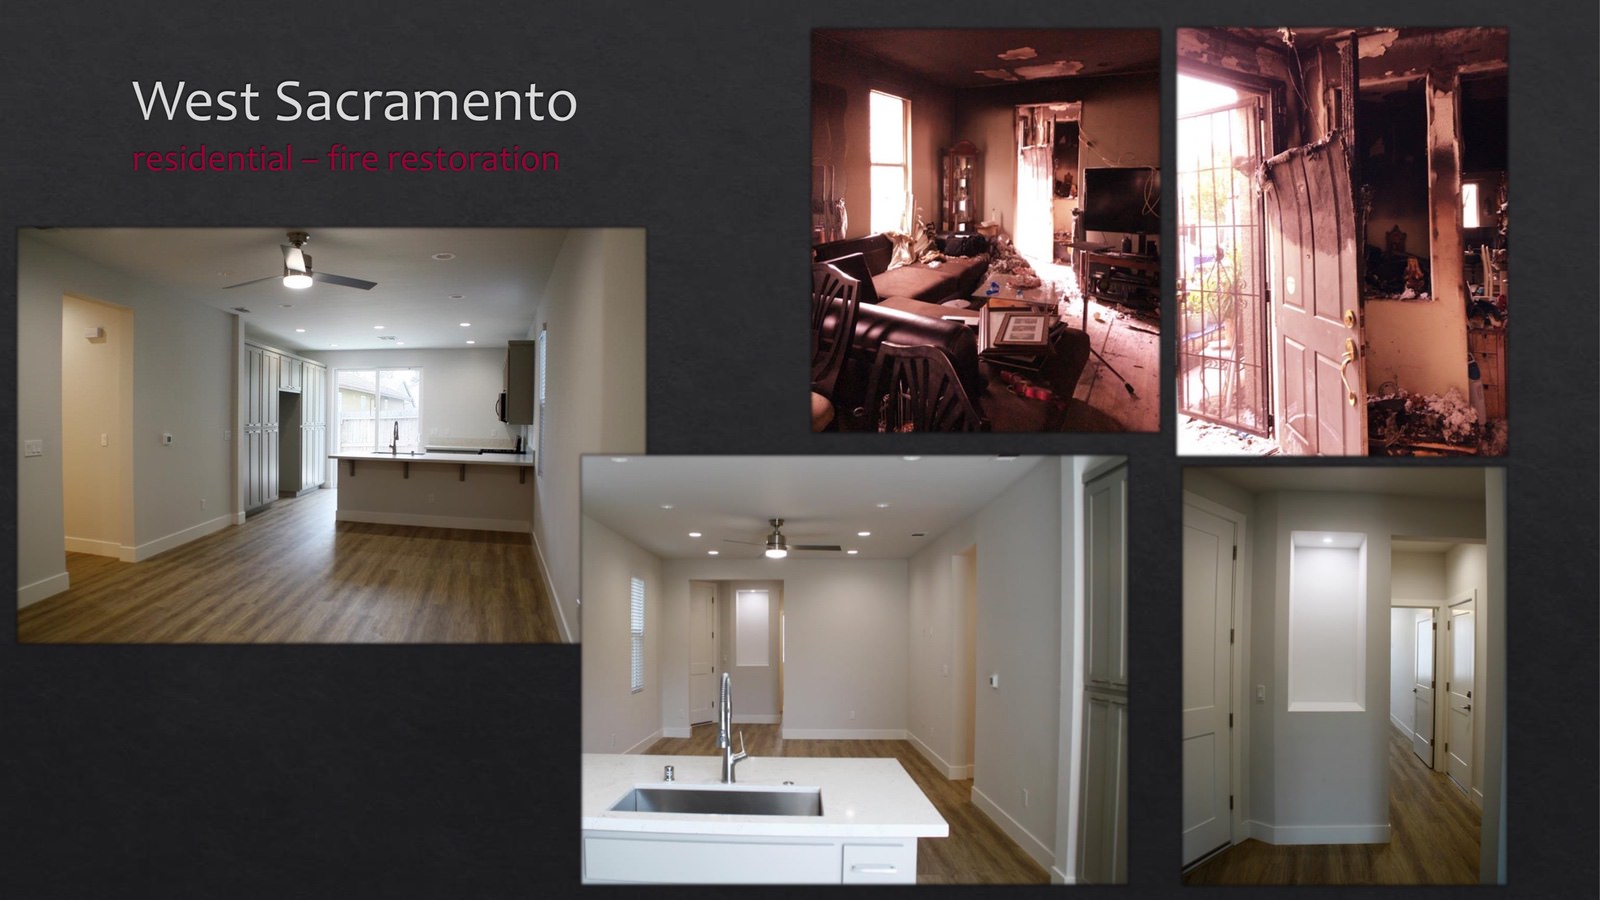 West Sacramento Residential fire restoration - kitchen + entryway - lightbox